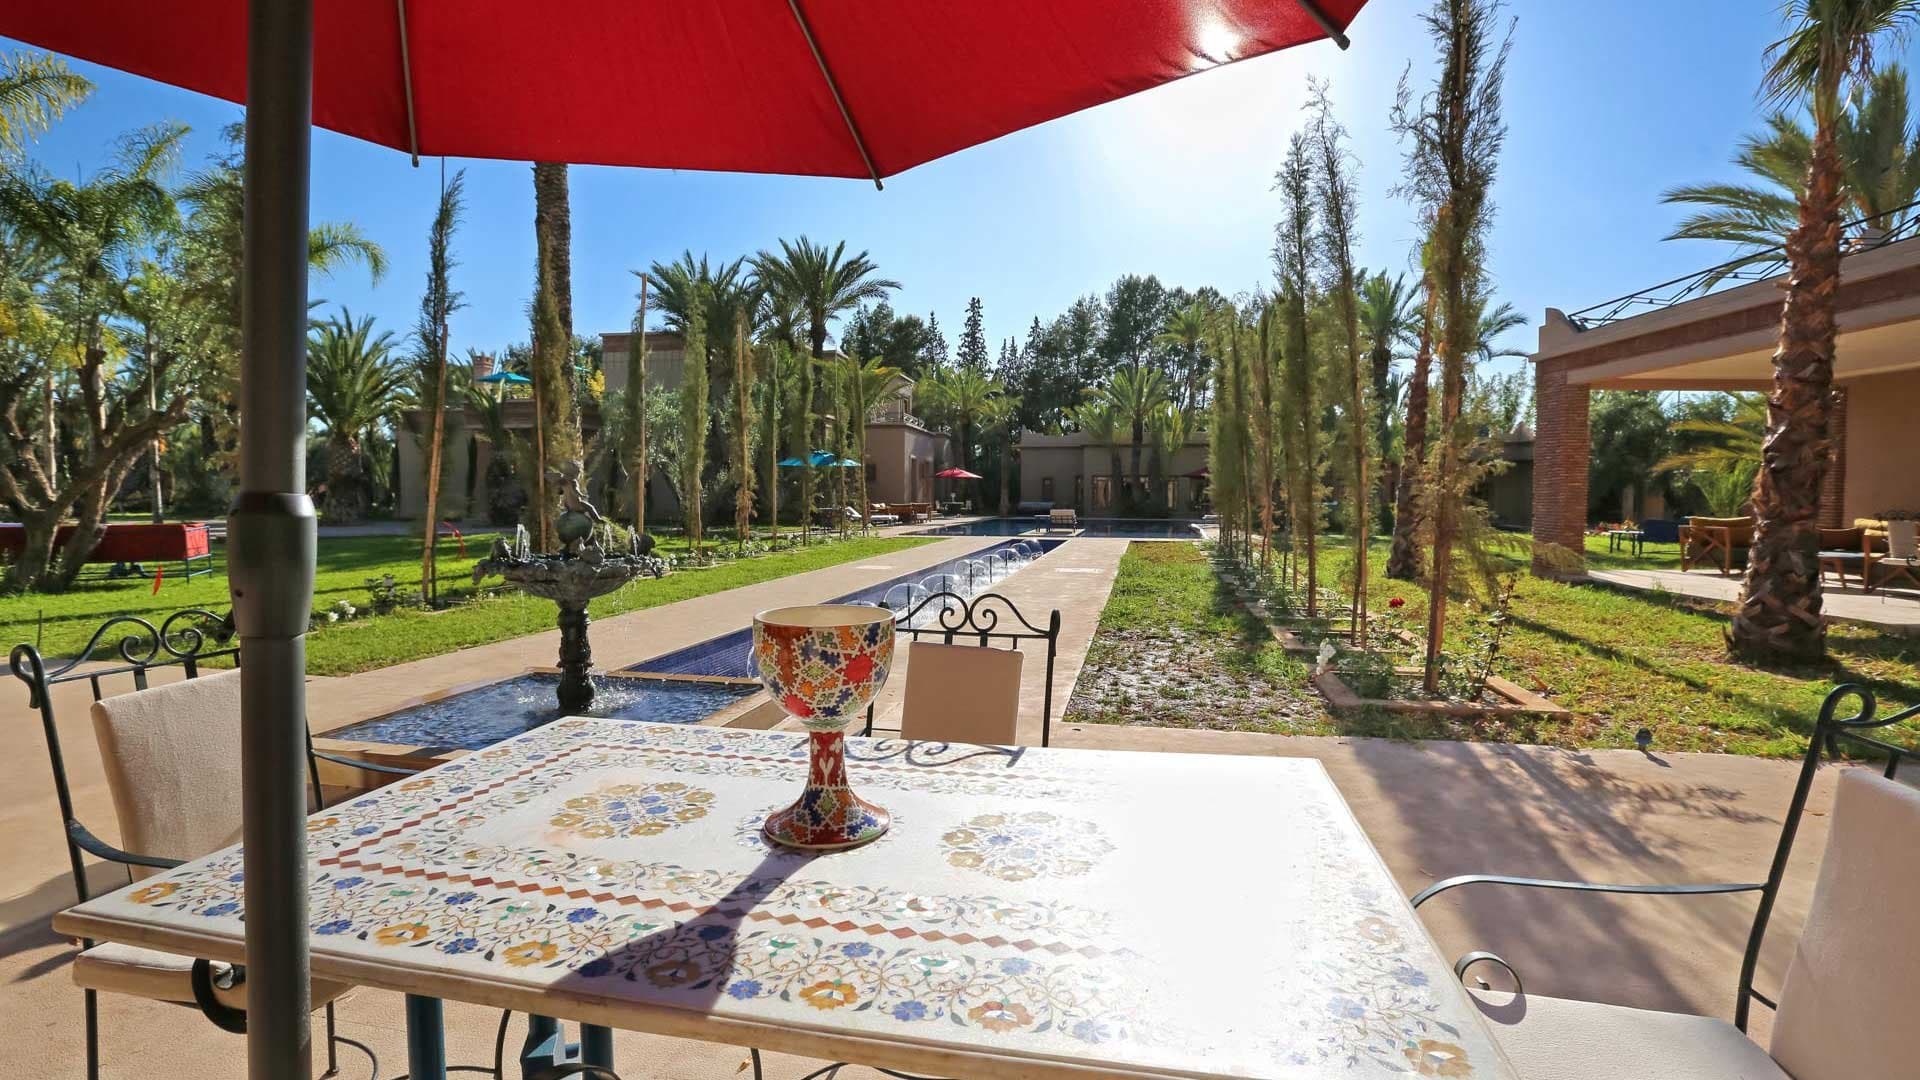 8 Bedroom Villa For Sale Marrakech Lp08726 2cf7881542f97e00.jpg